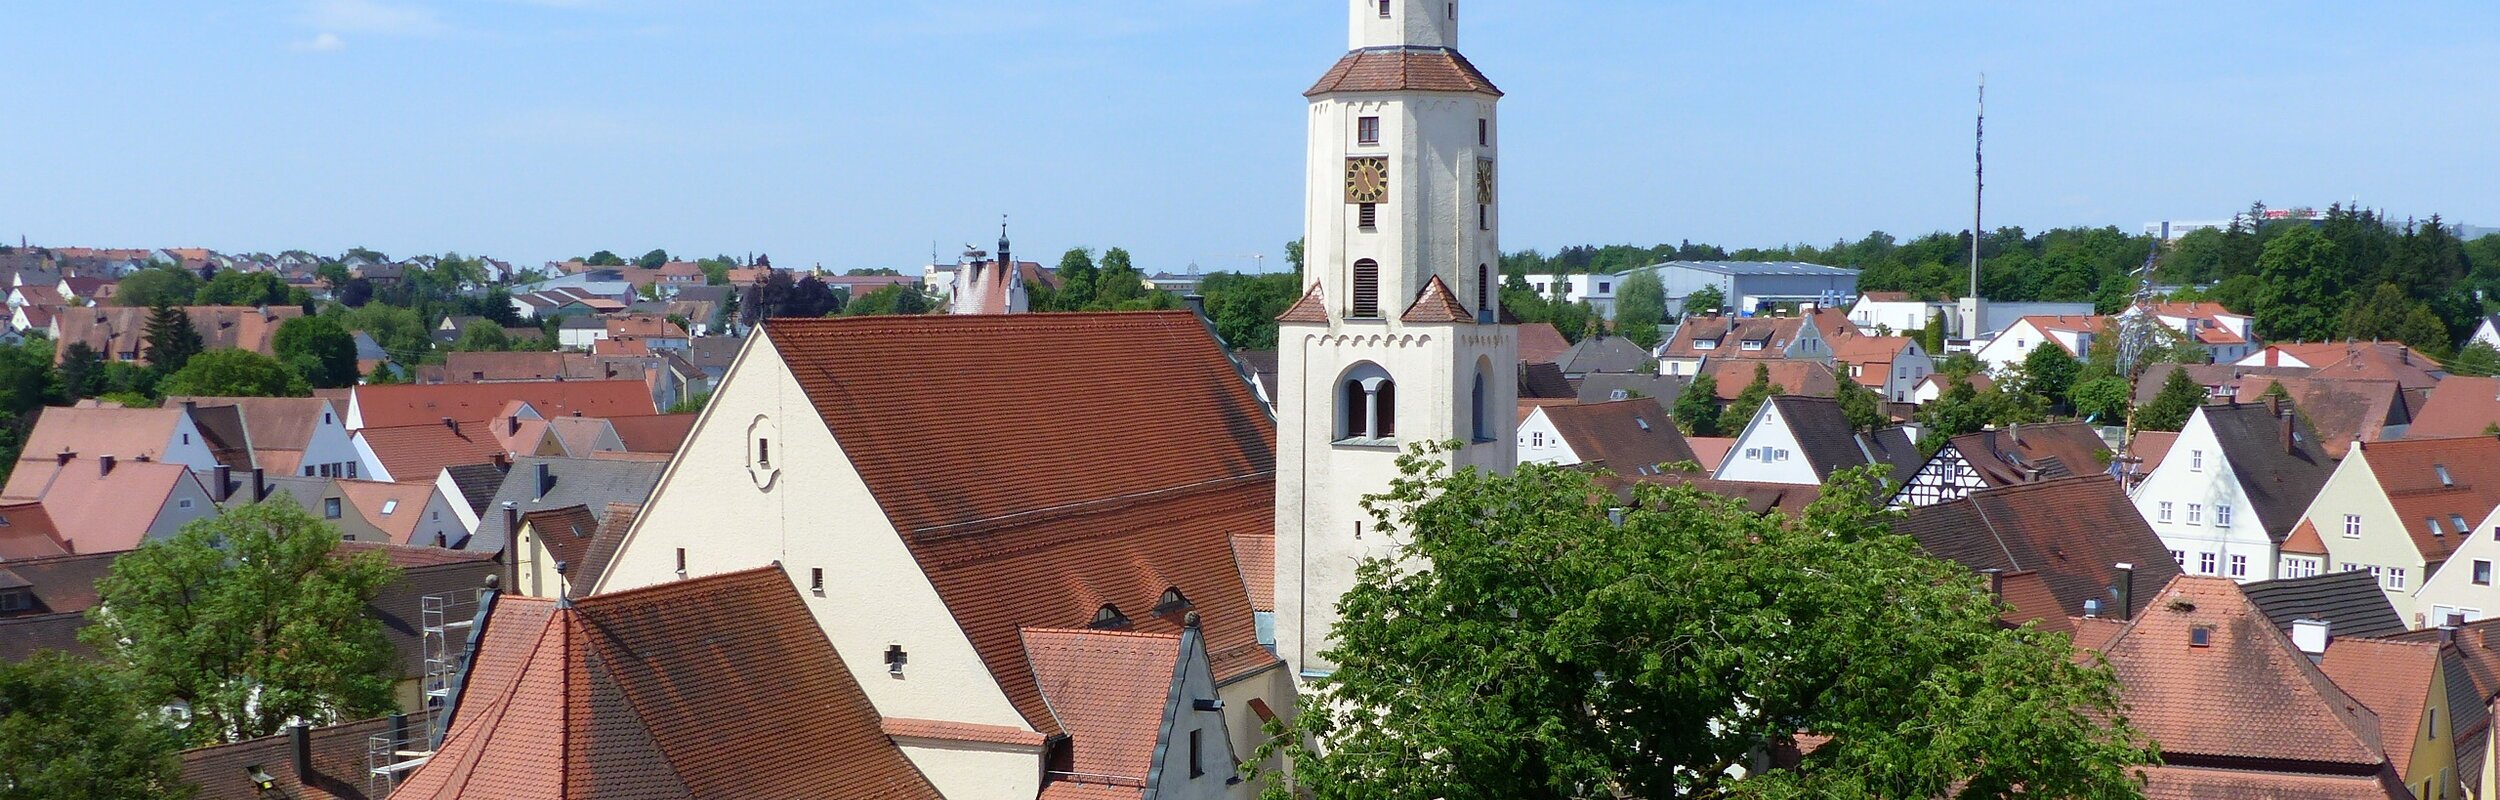 Stadtpfarrkirche St. Walburga Monheim